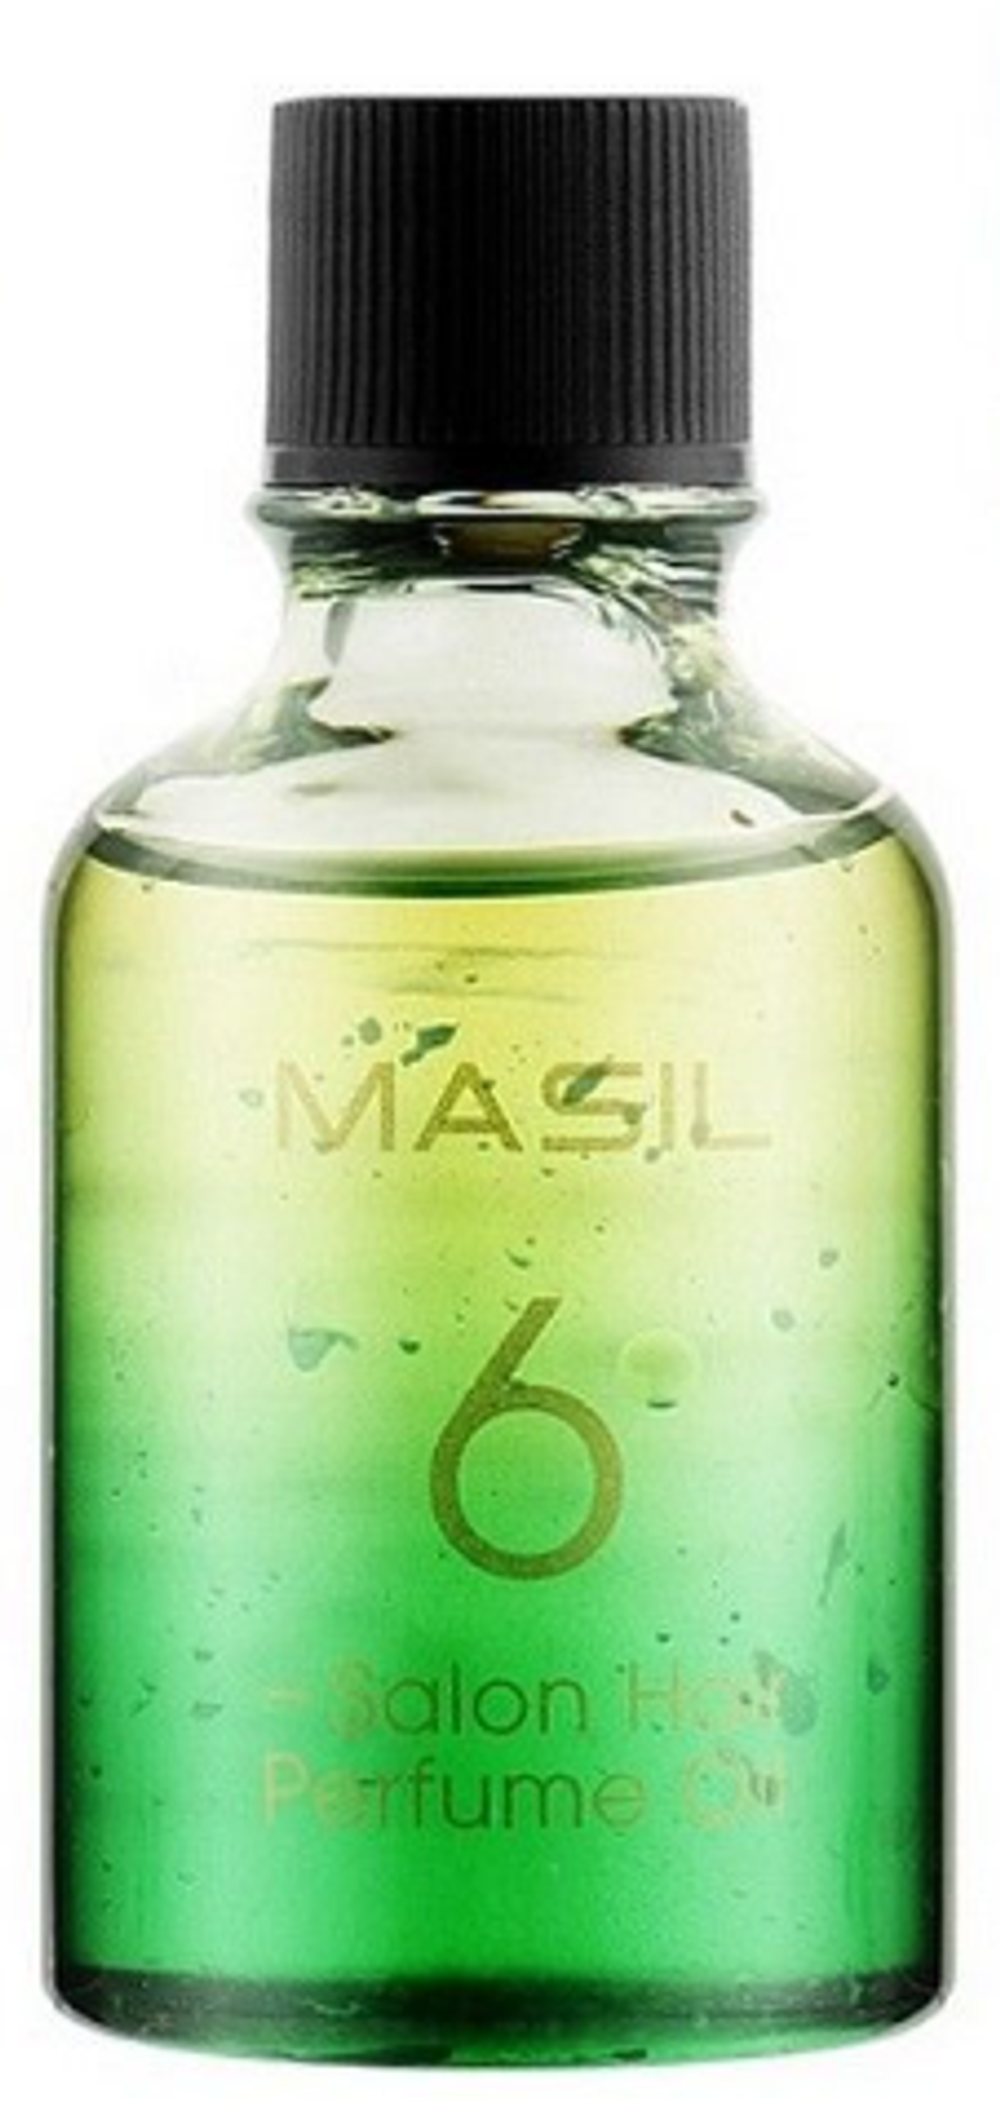 Masil 6 Salon Hair Perfume Oil масло для волос 50мл